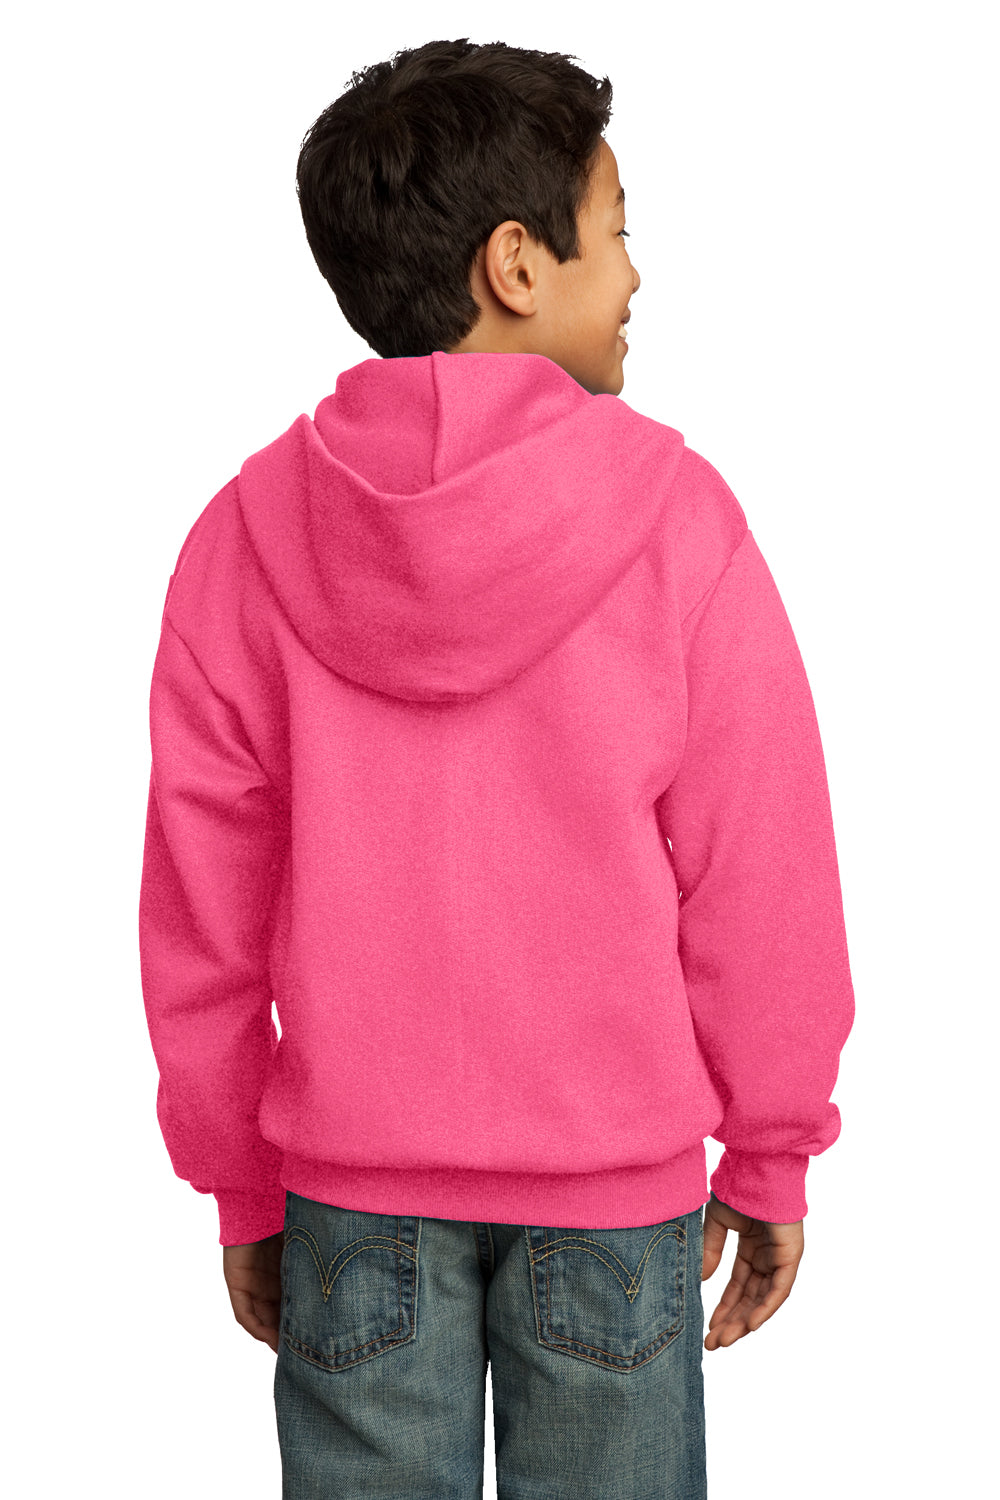 Port & Company PC90YZH Youth Core Fleece Full Zip Hooded Sweatshirt Hoodie Neon Pink Back